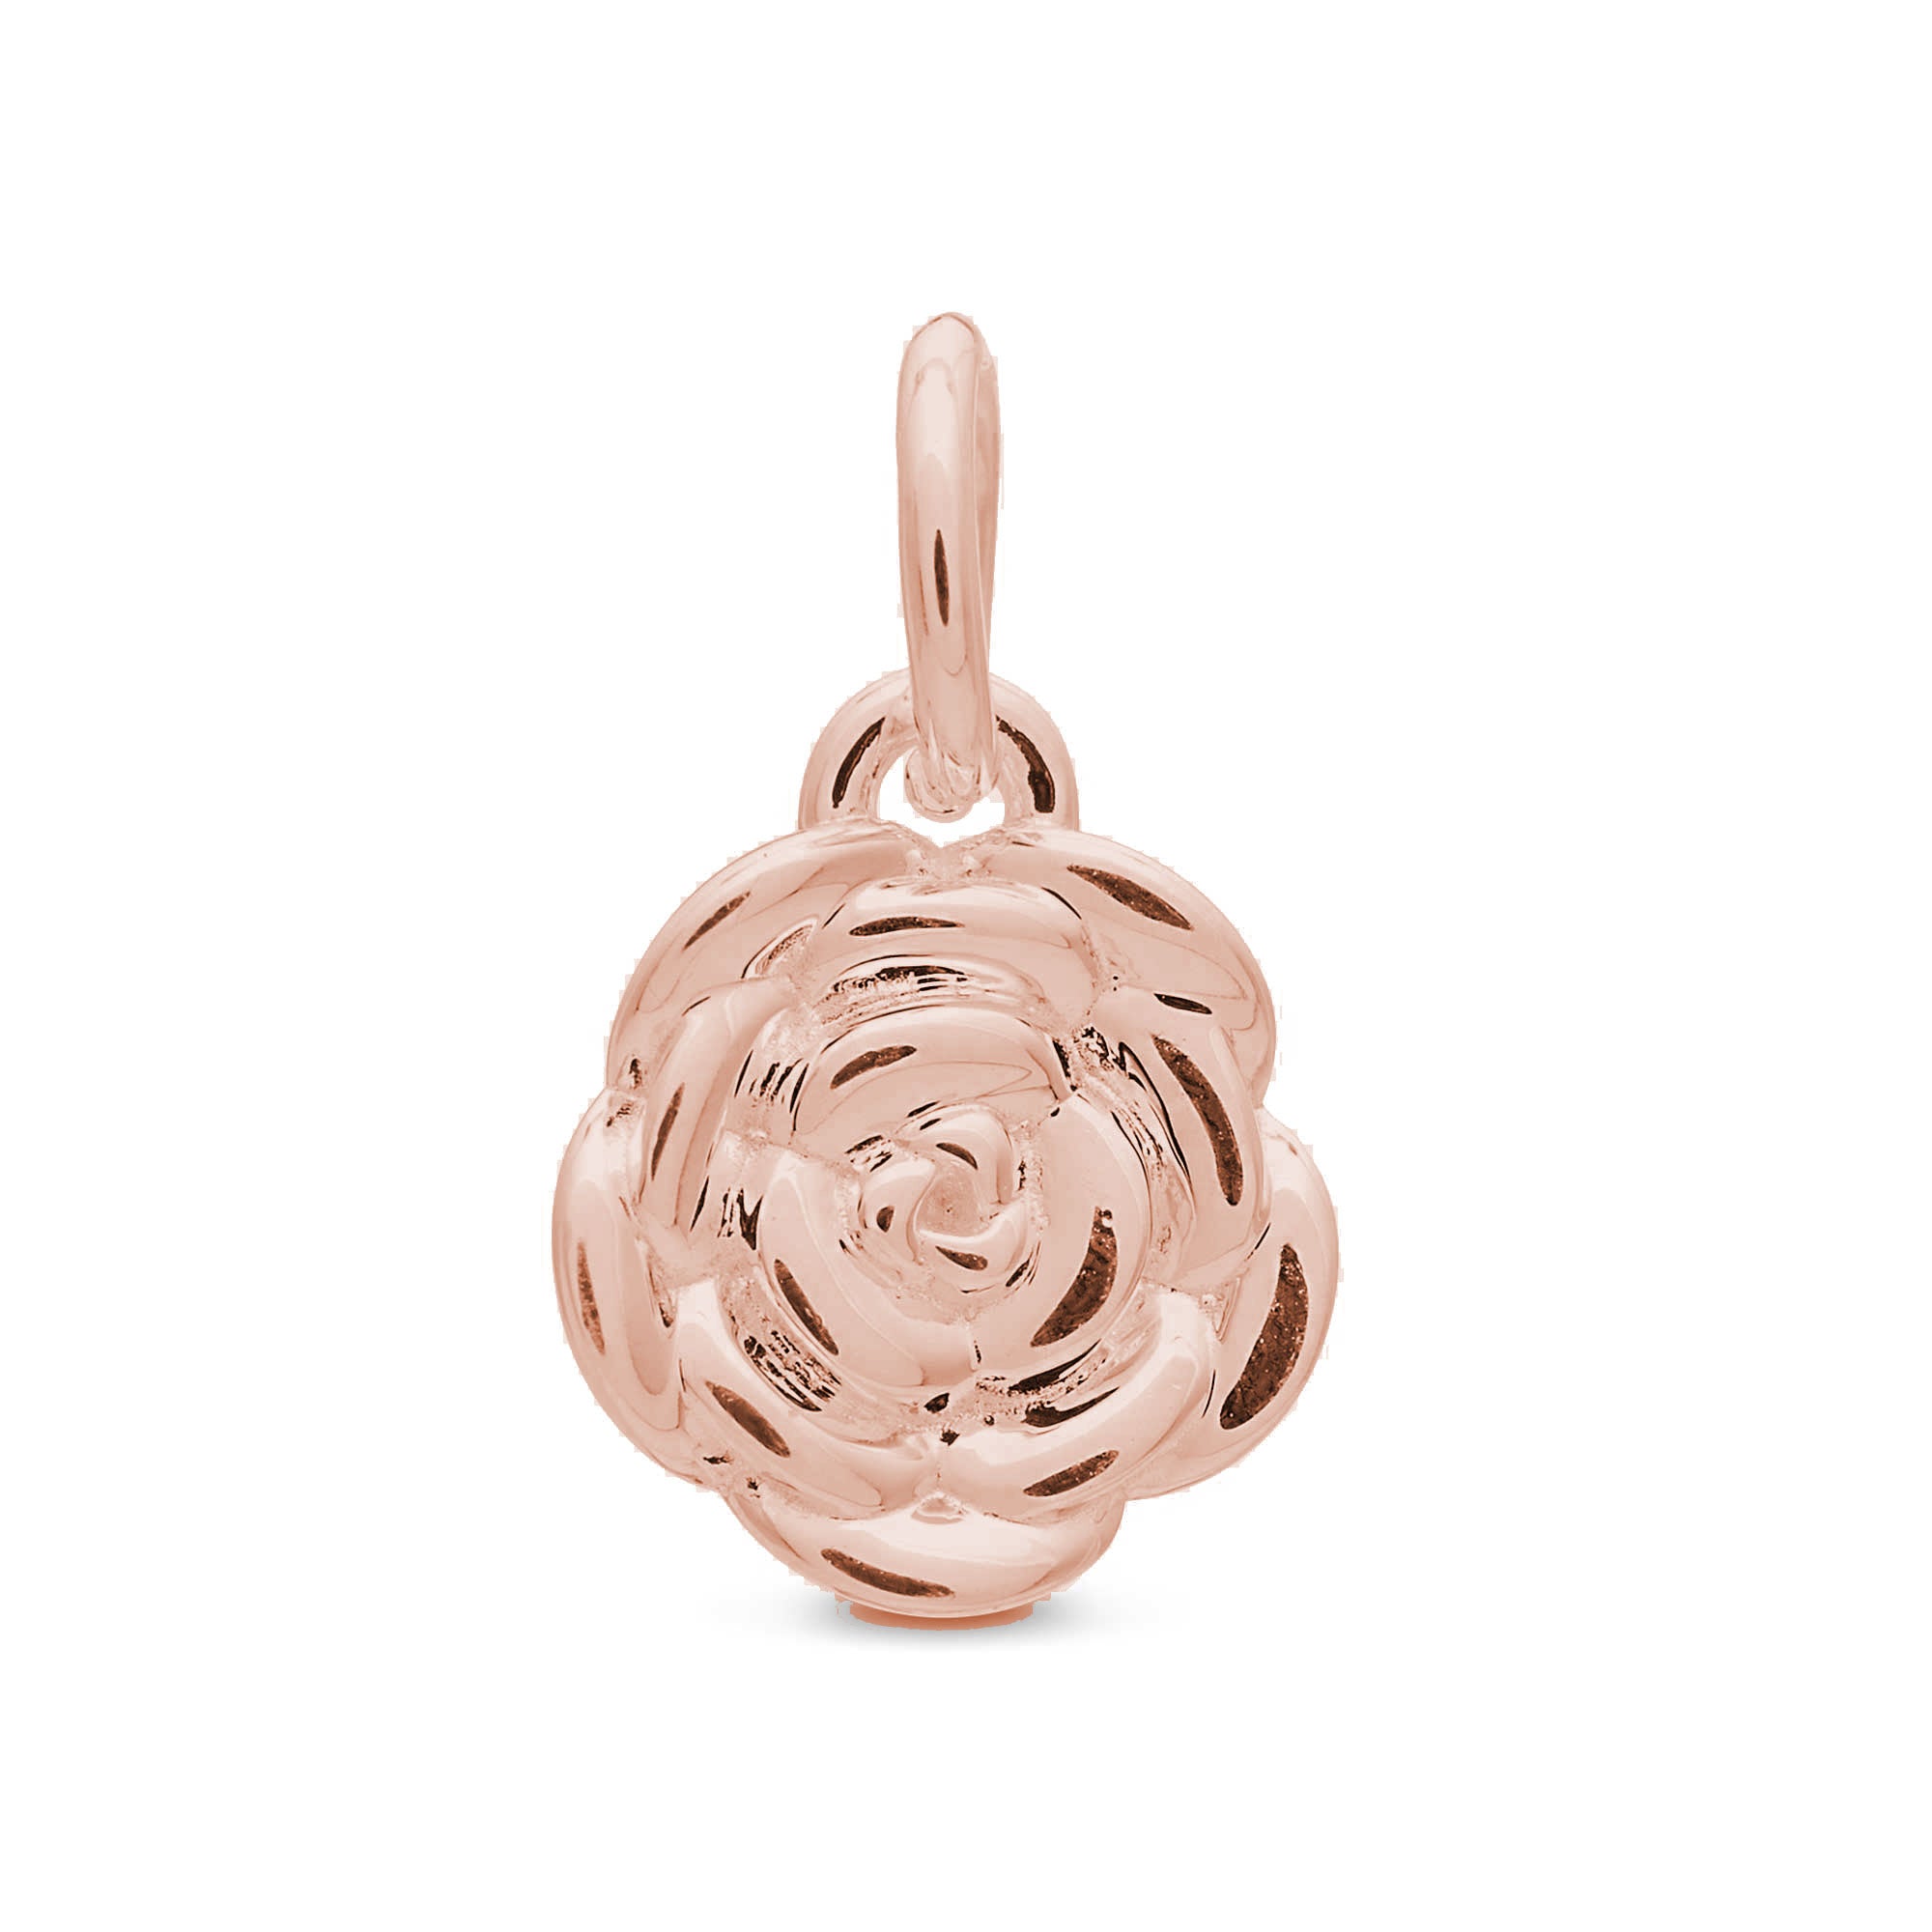 solid rose gold rose flower bracelet charm pendant necklace Chelsea Flower Show